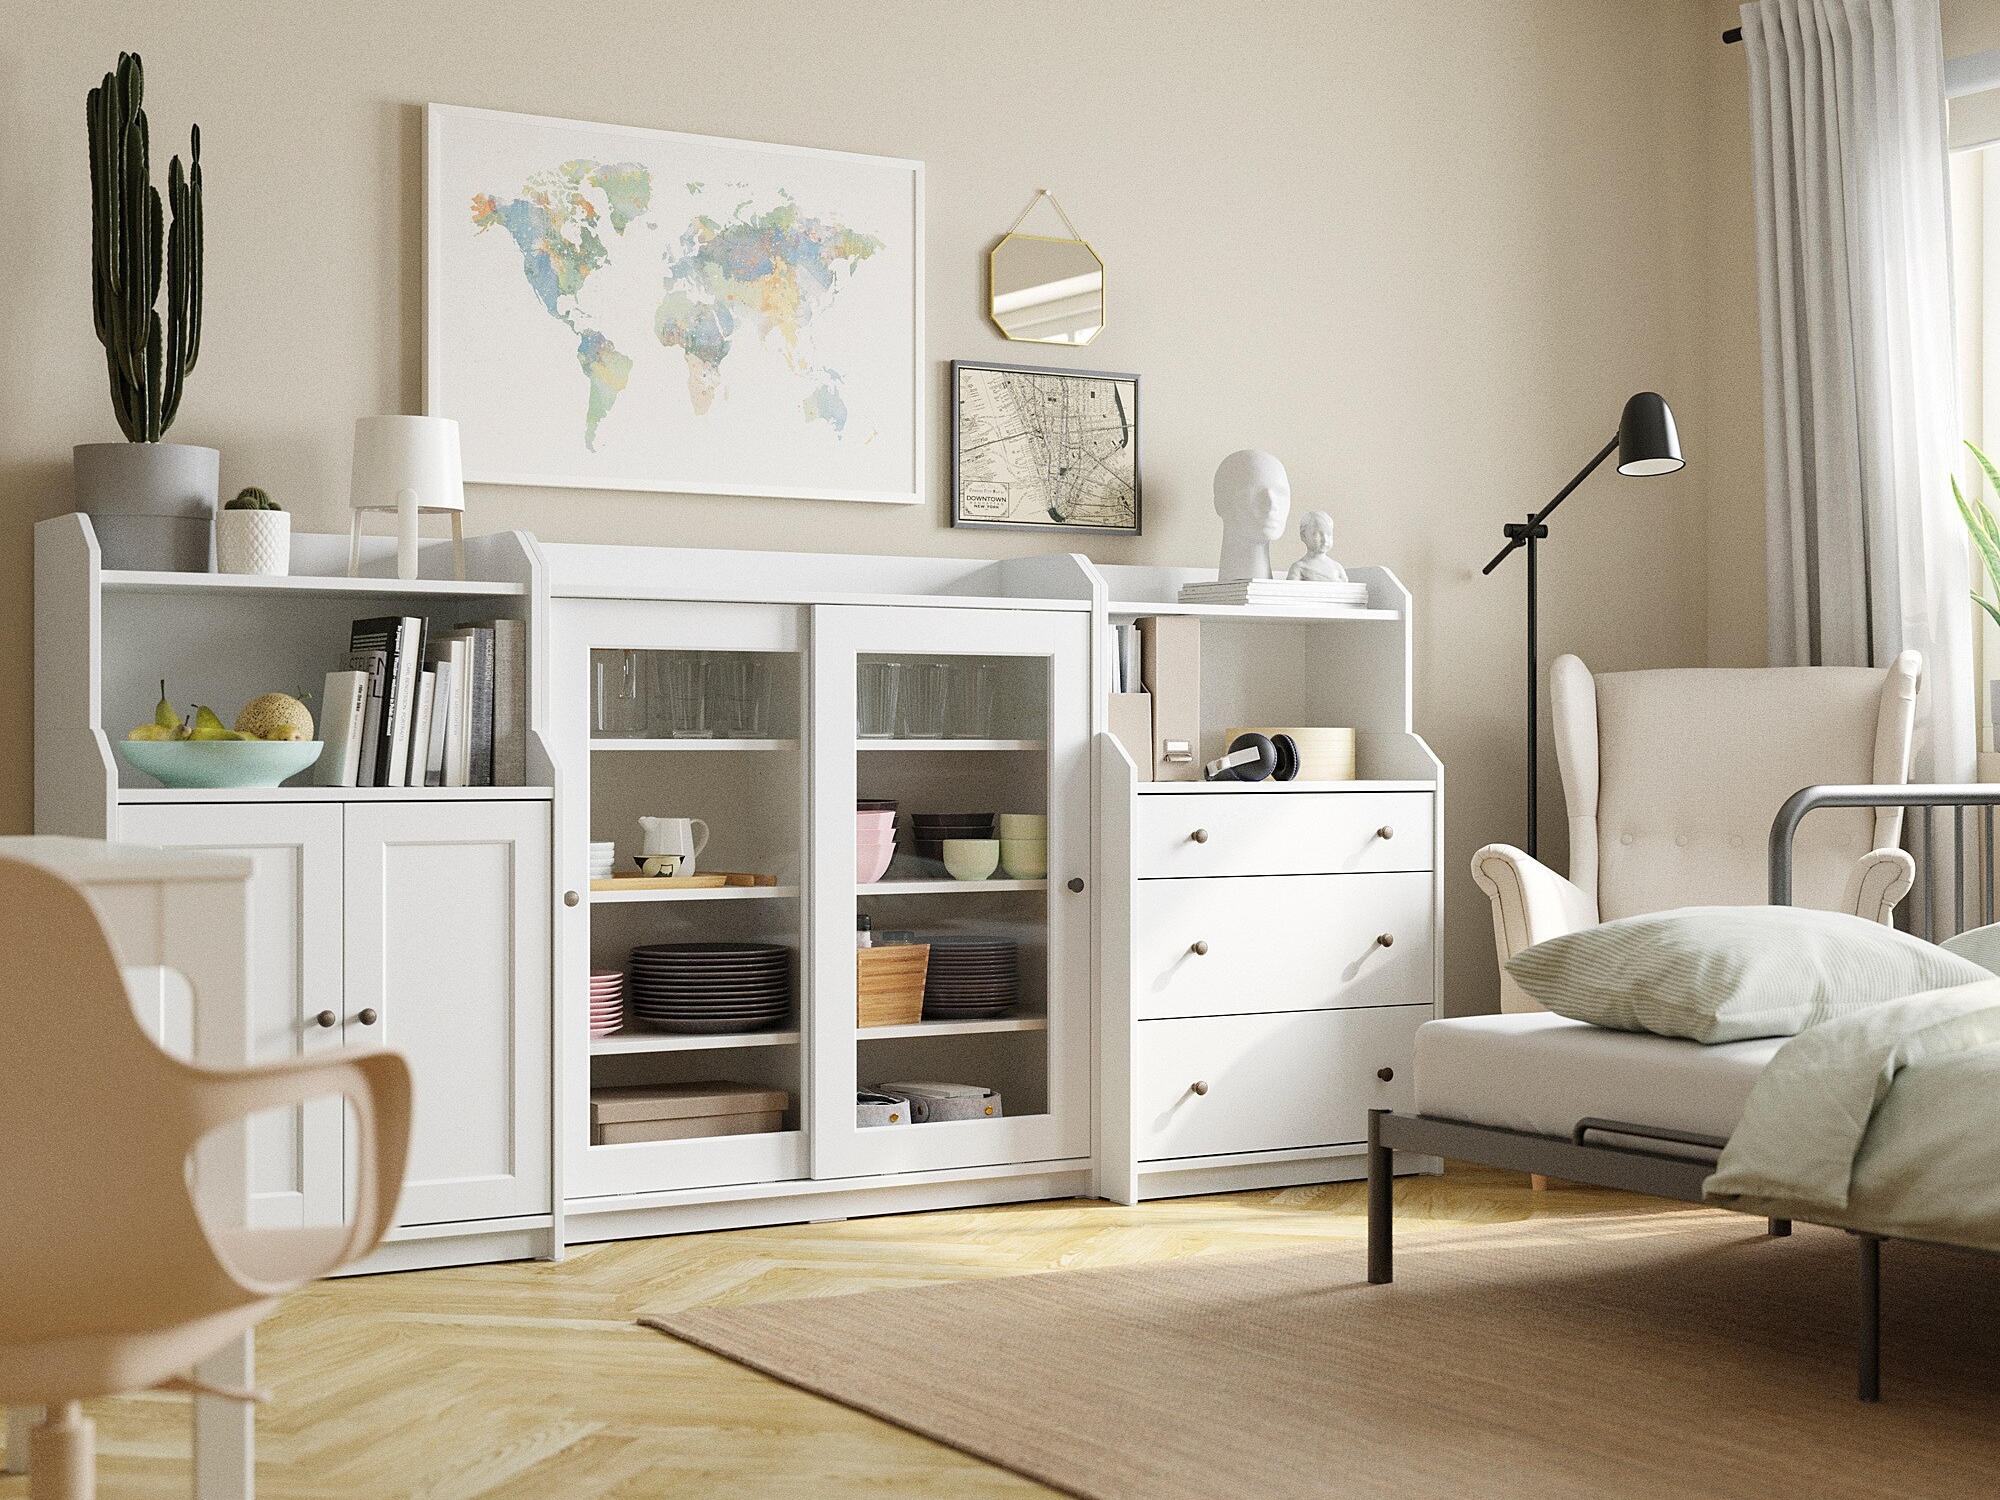 Изображение товара Комод Хауга 15 white ИКЕА (IKEA), 244x46x116 см на сайте adeta.ru